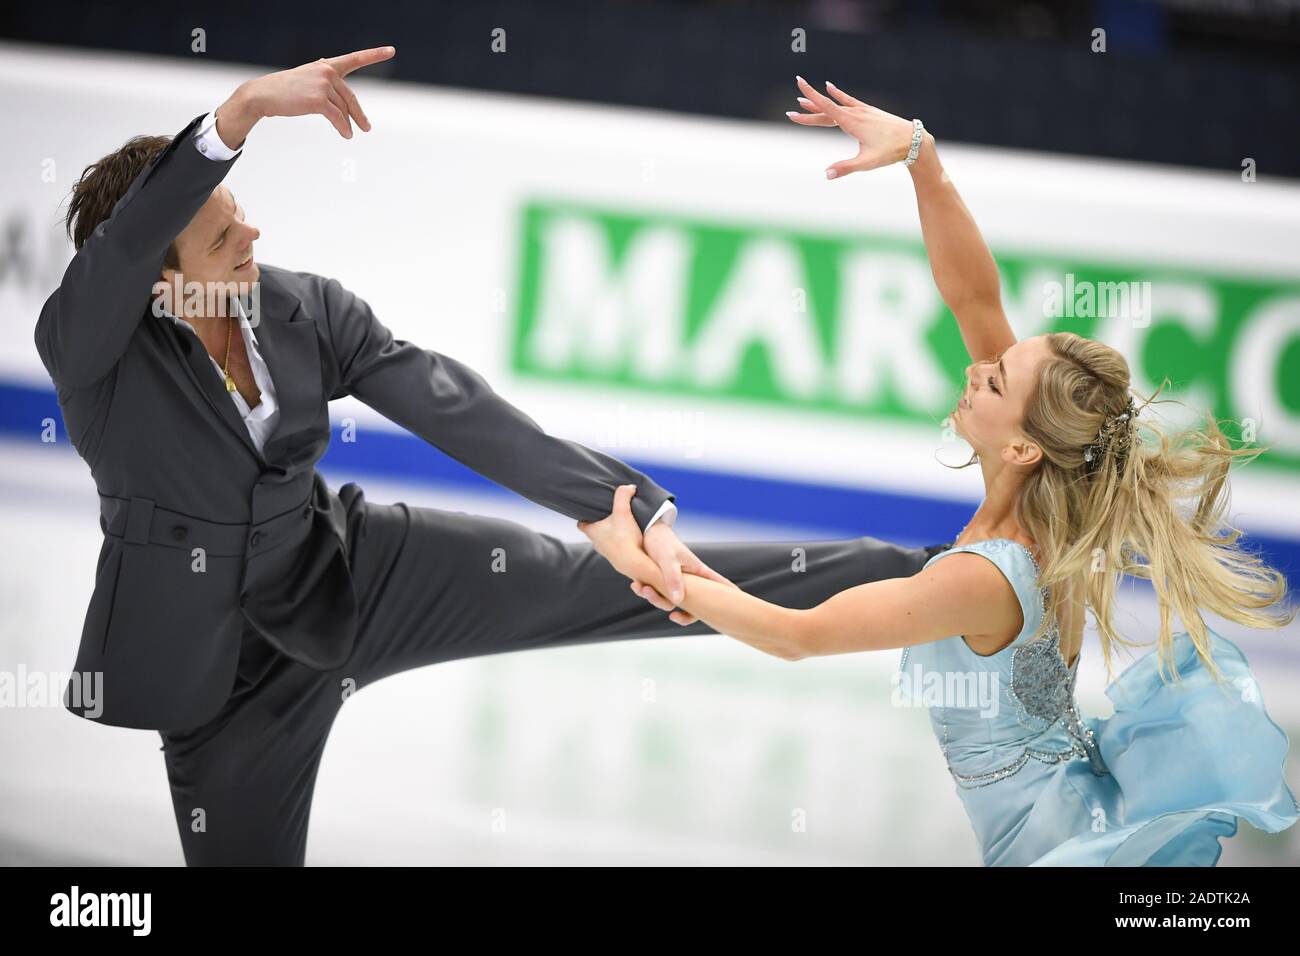 Victoria SINITSINA & Nikita KATSALAPOV from Russia, during Rhythm Dance  Practice, at the ISU Junior & Senior Grand Prix of Figure Skating Final  2019/20 at Palavela, on December 04, 2019 in Torino,